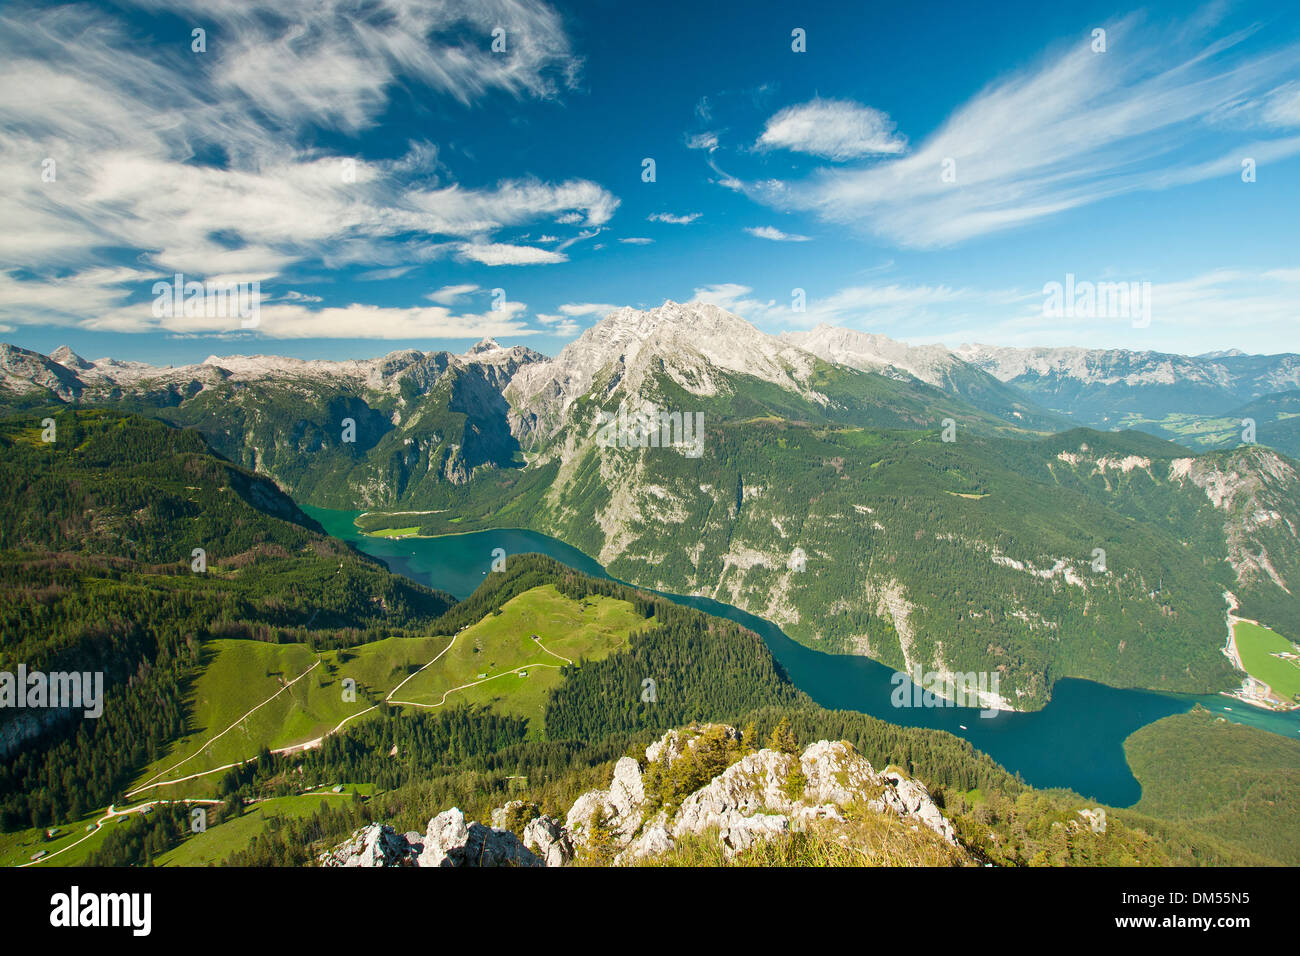 Bayern Panorama Alpen Bayern Tourismus Deutschland Land national Alamy Berchtesgadener Berge Berchtesgaden oberen himmelblauen Klippe Stockfotografie Himmel -